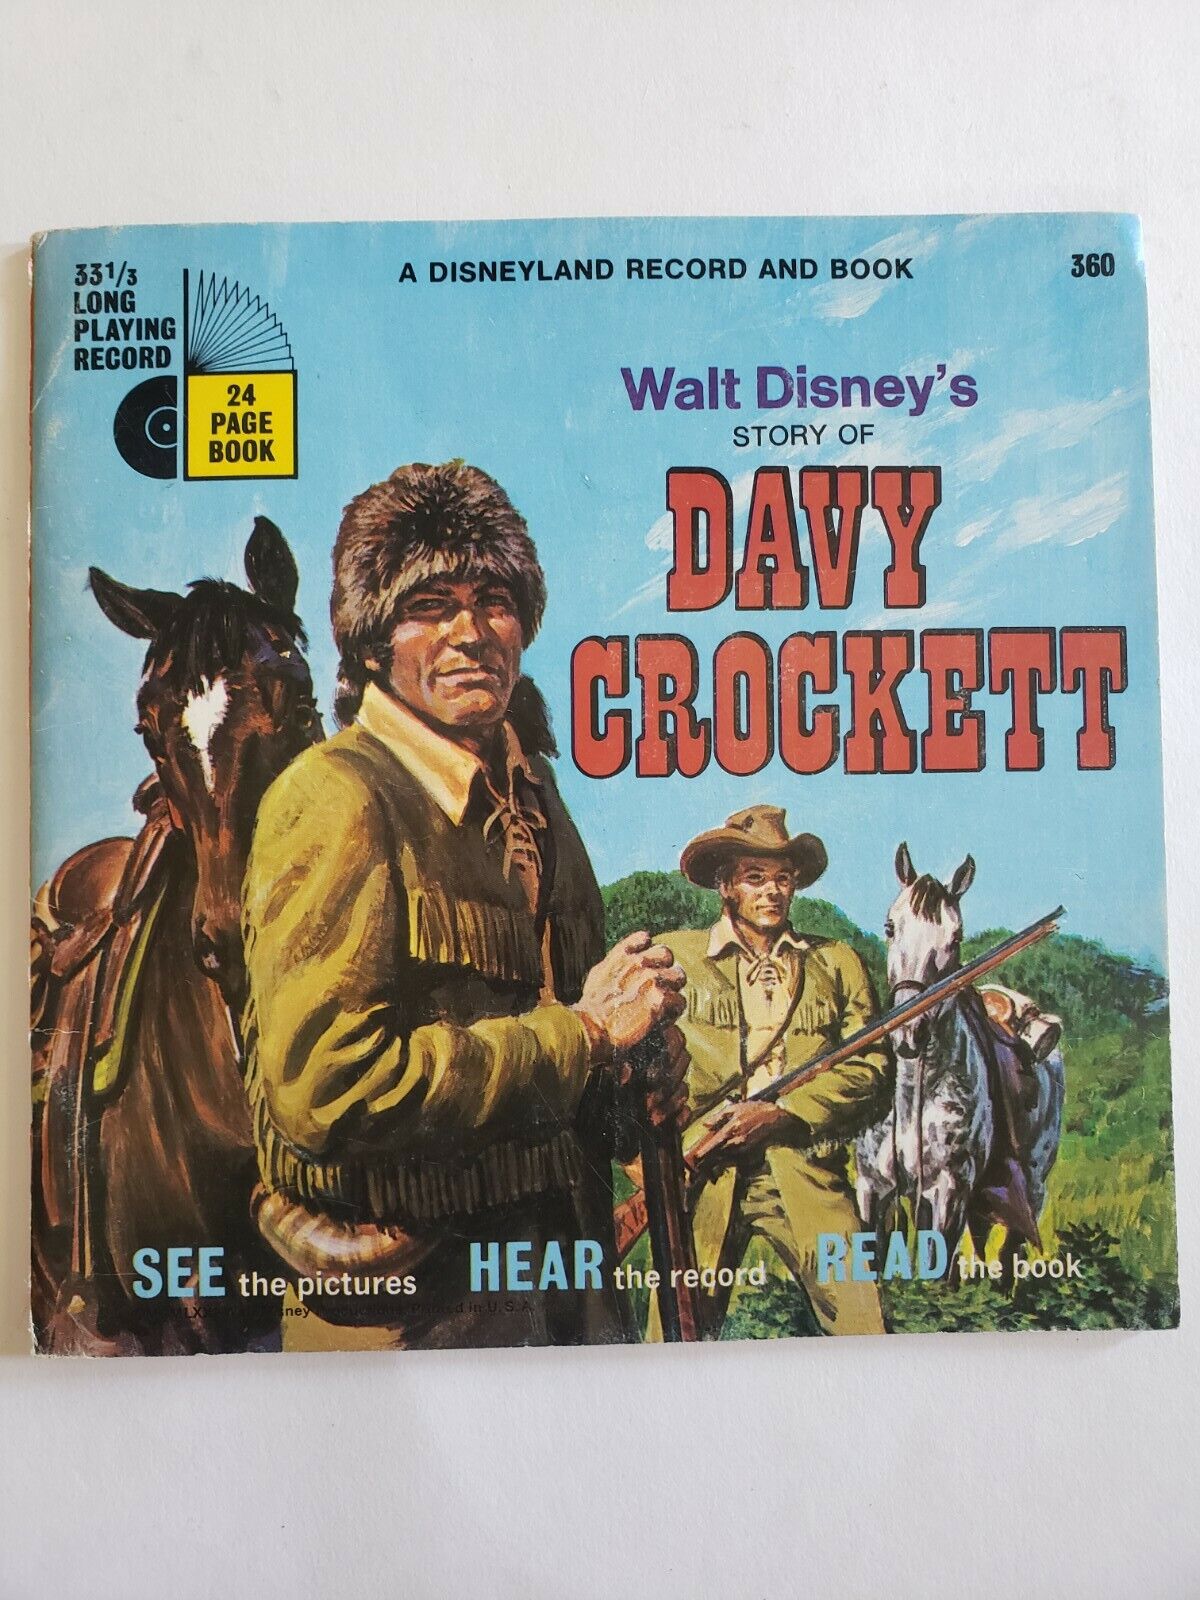 Disneyland Davy Crockett 24 Page Book & 33 1/3 Record Vinyl Original Vintage